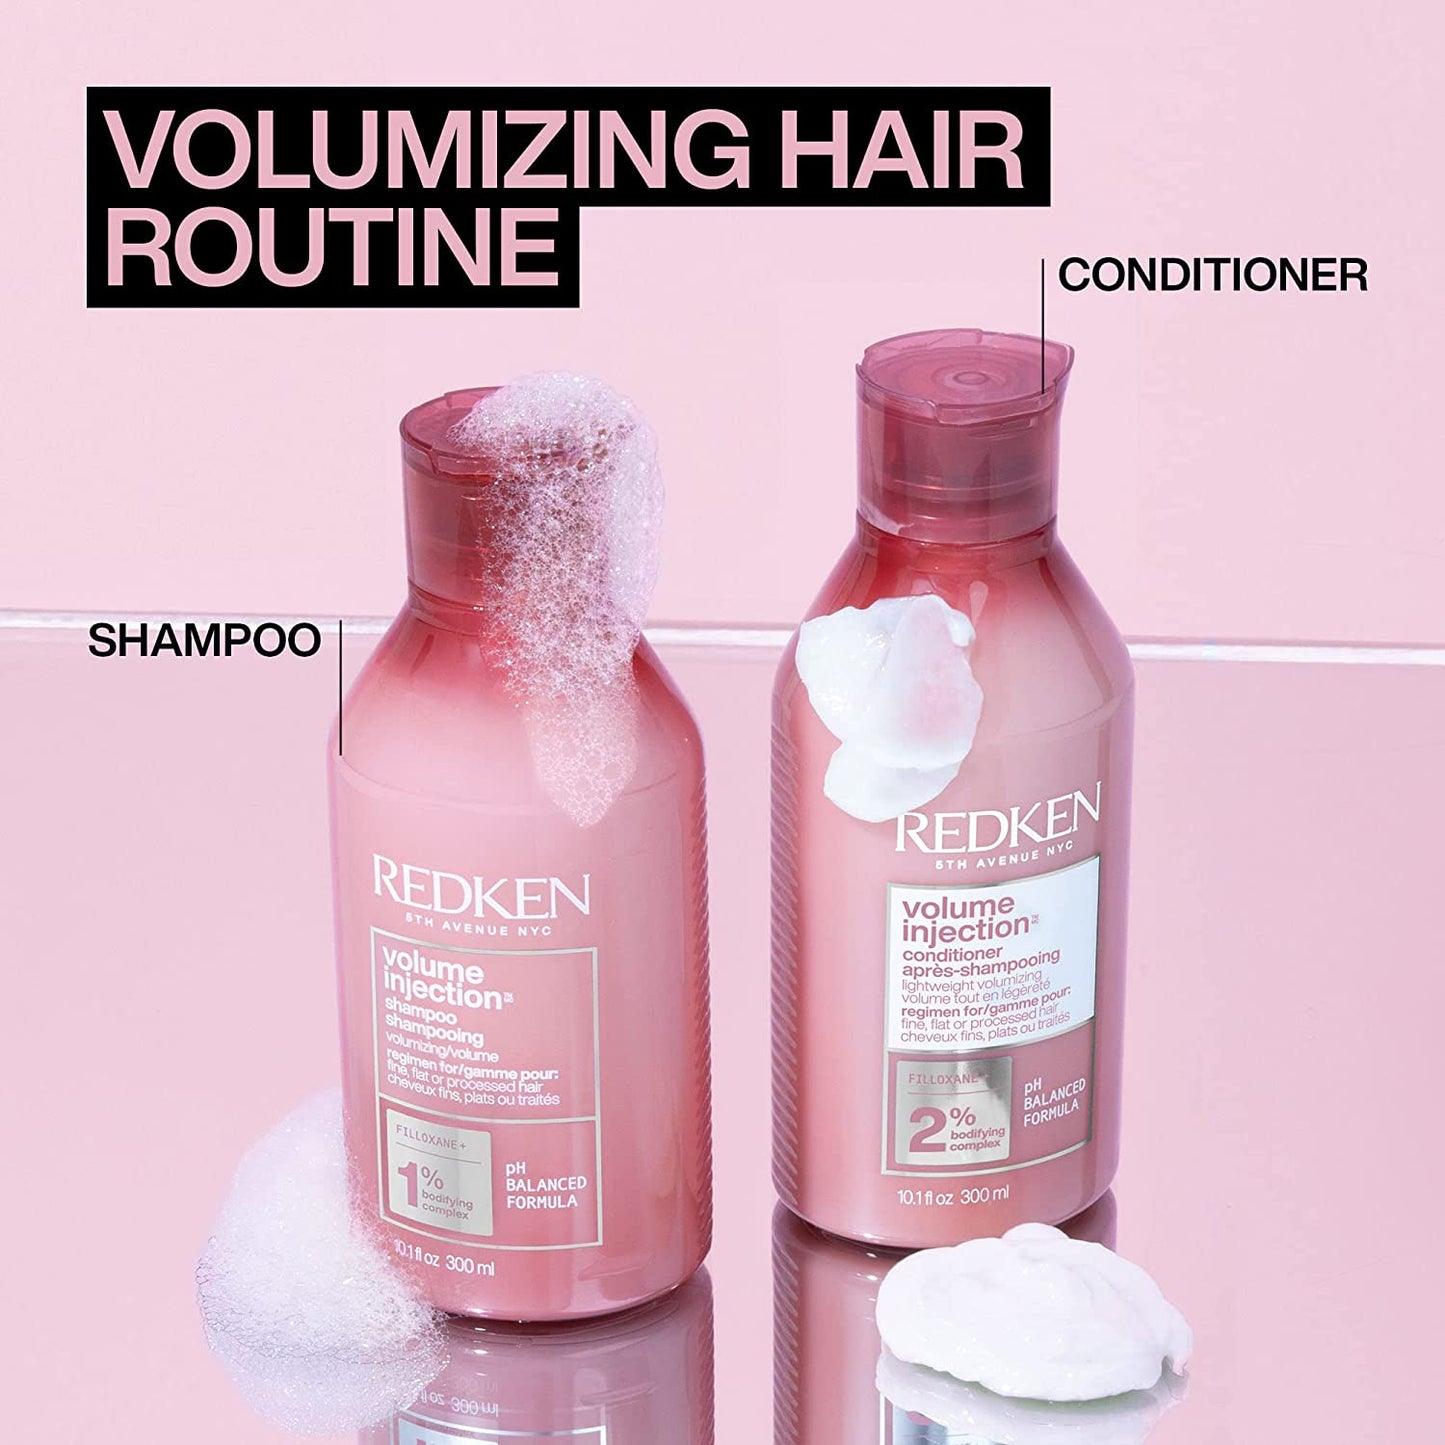 Redken 5th Avenue Nyc Volume Injection Shampoo Volumizing Filloxane 10.1 fl. oz (300mL)